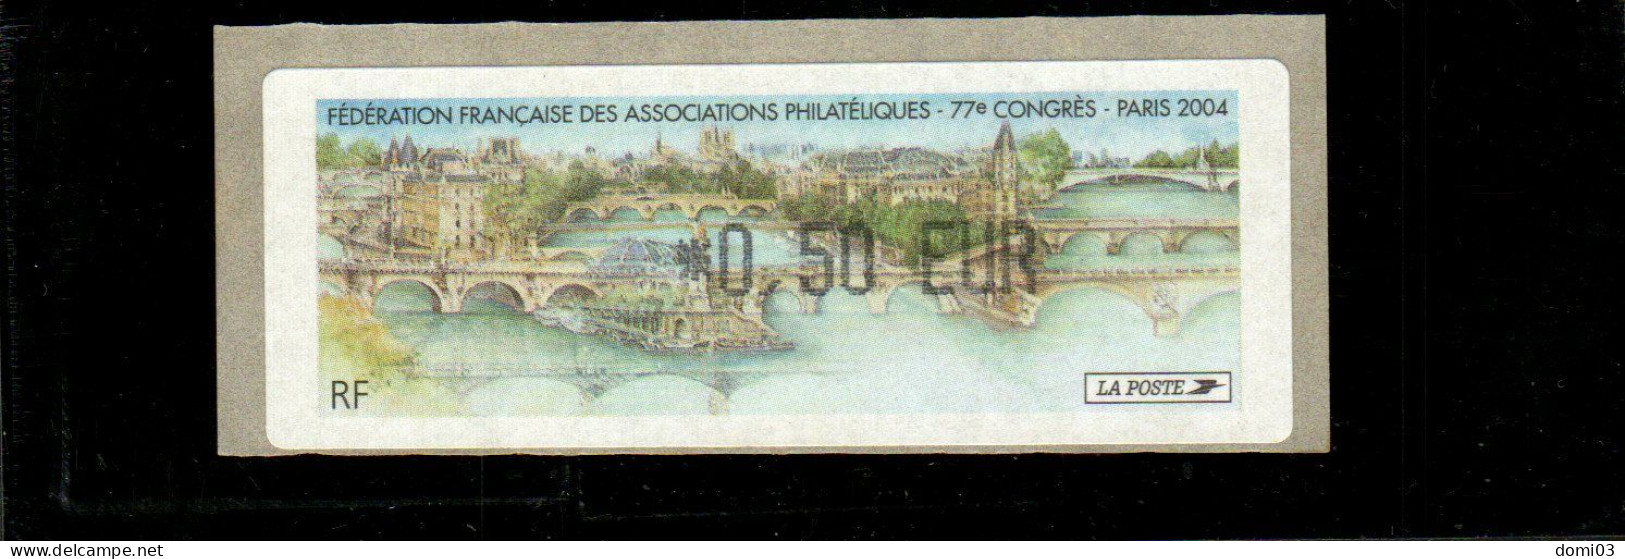 77è Congrès FFAP Paris 2004 - 1999-2009 Viñetas De Franqueo Illustradas